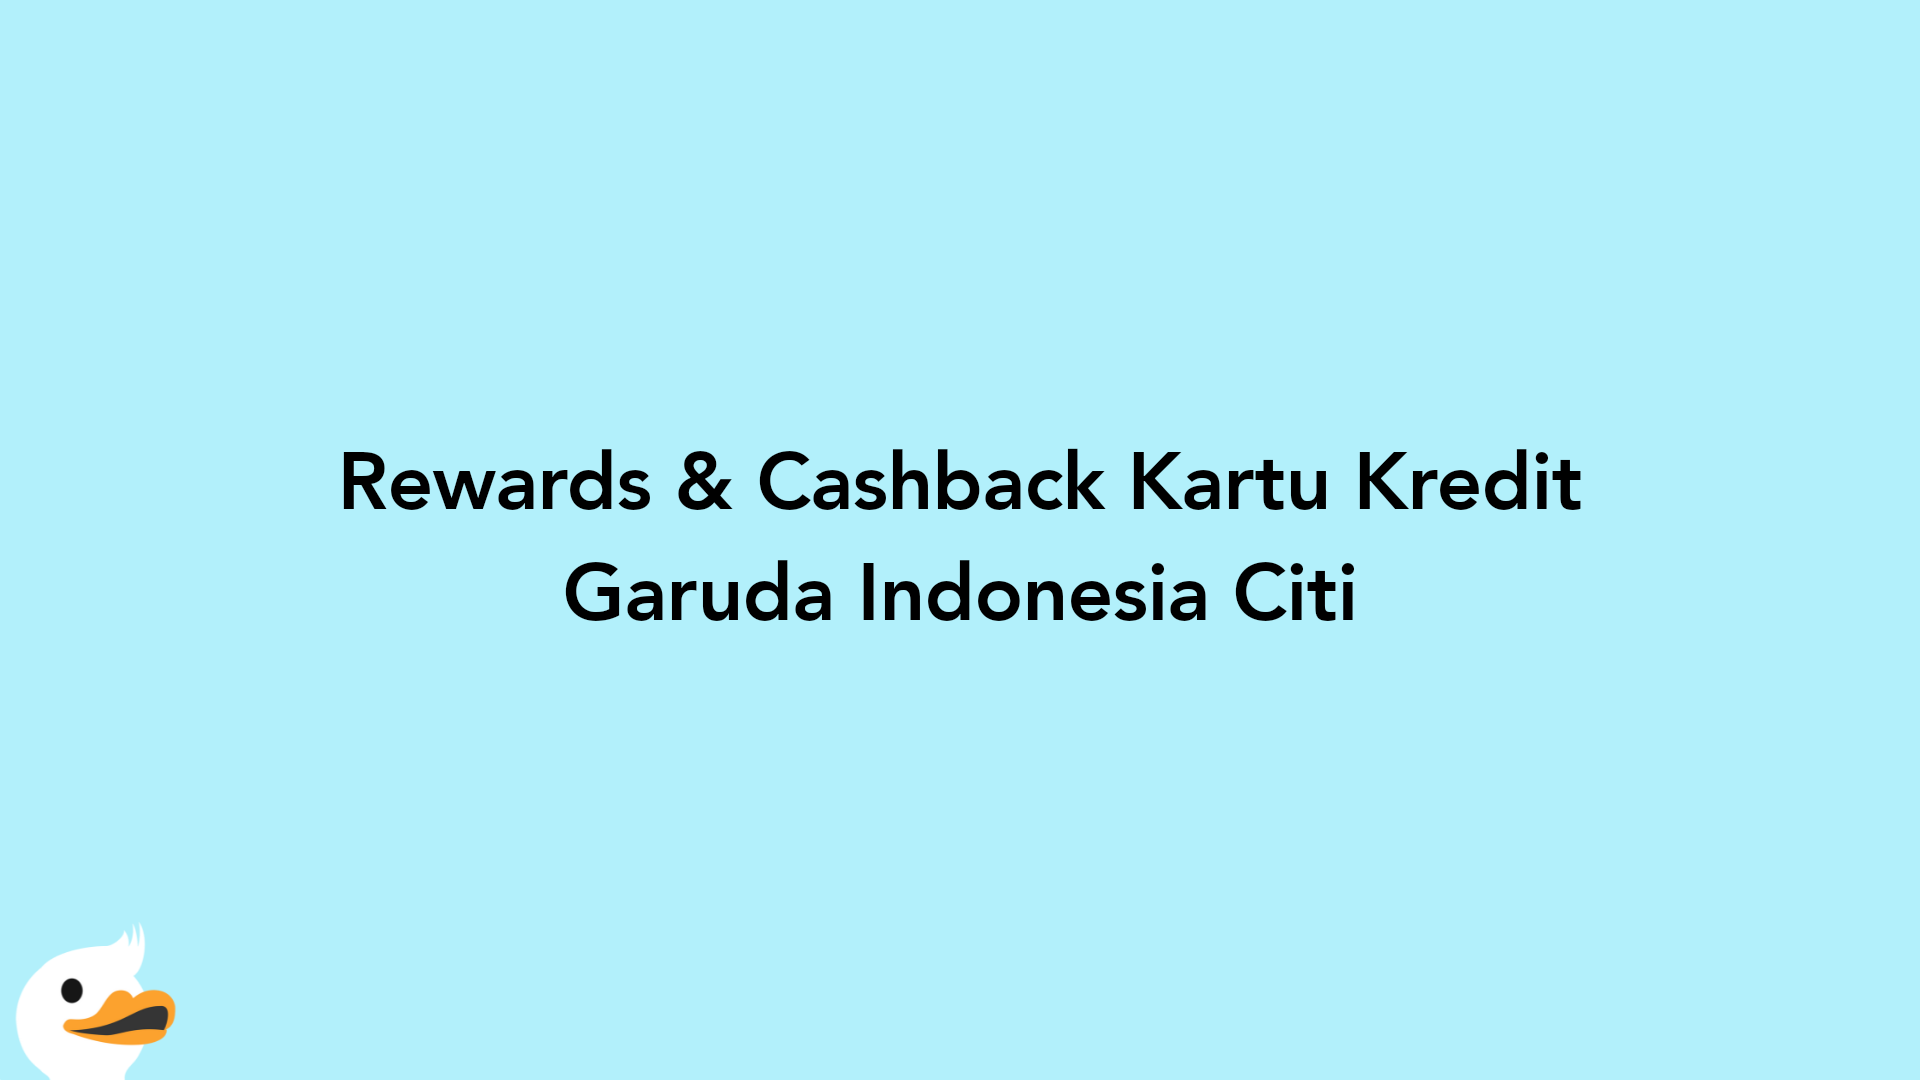 Rewards & Cashback Kartu Kredit Garuda Indonesia Citi